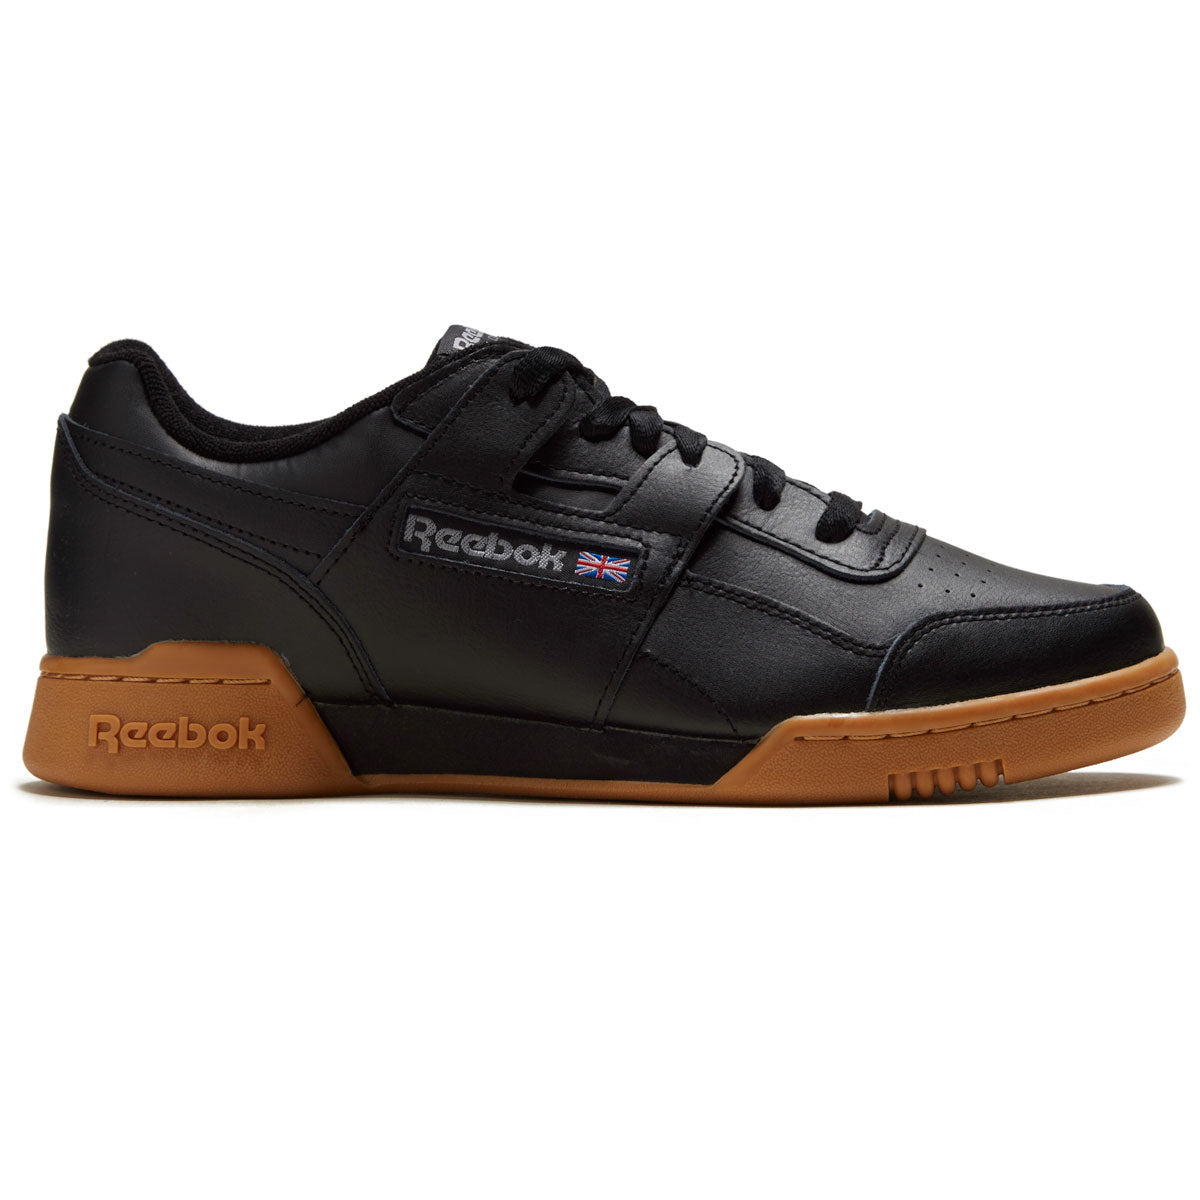 Reebok Workout Plus Shoes - Black/Carbon/Classic Red/Royal/Gum image 1